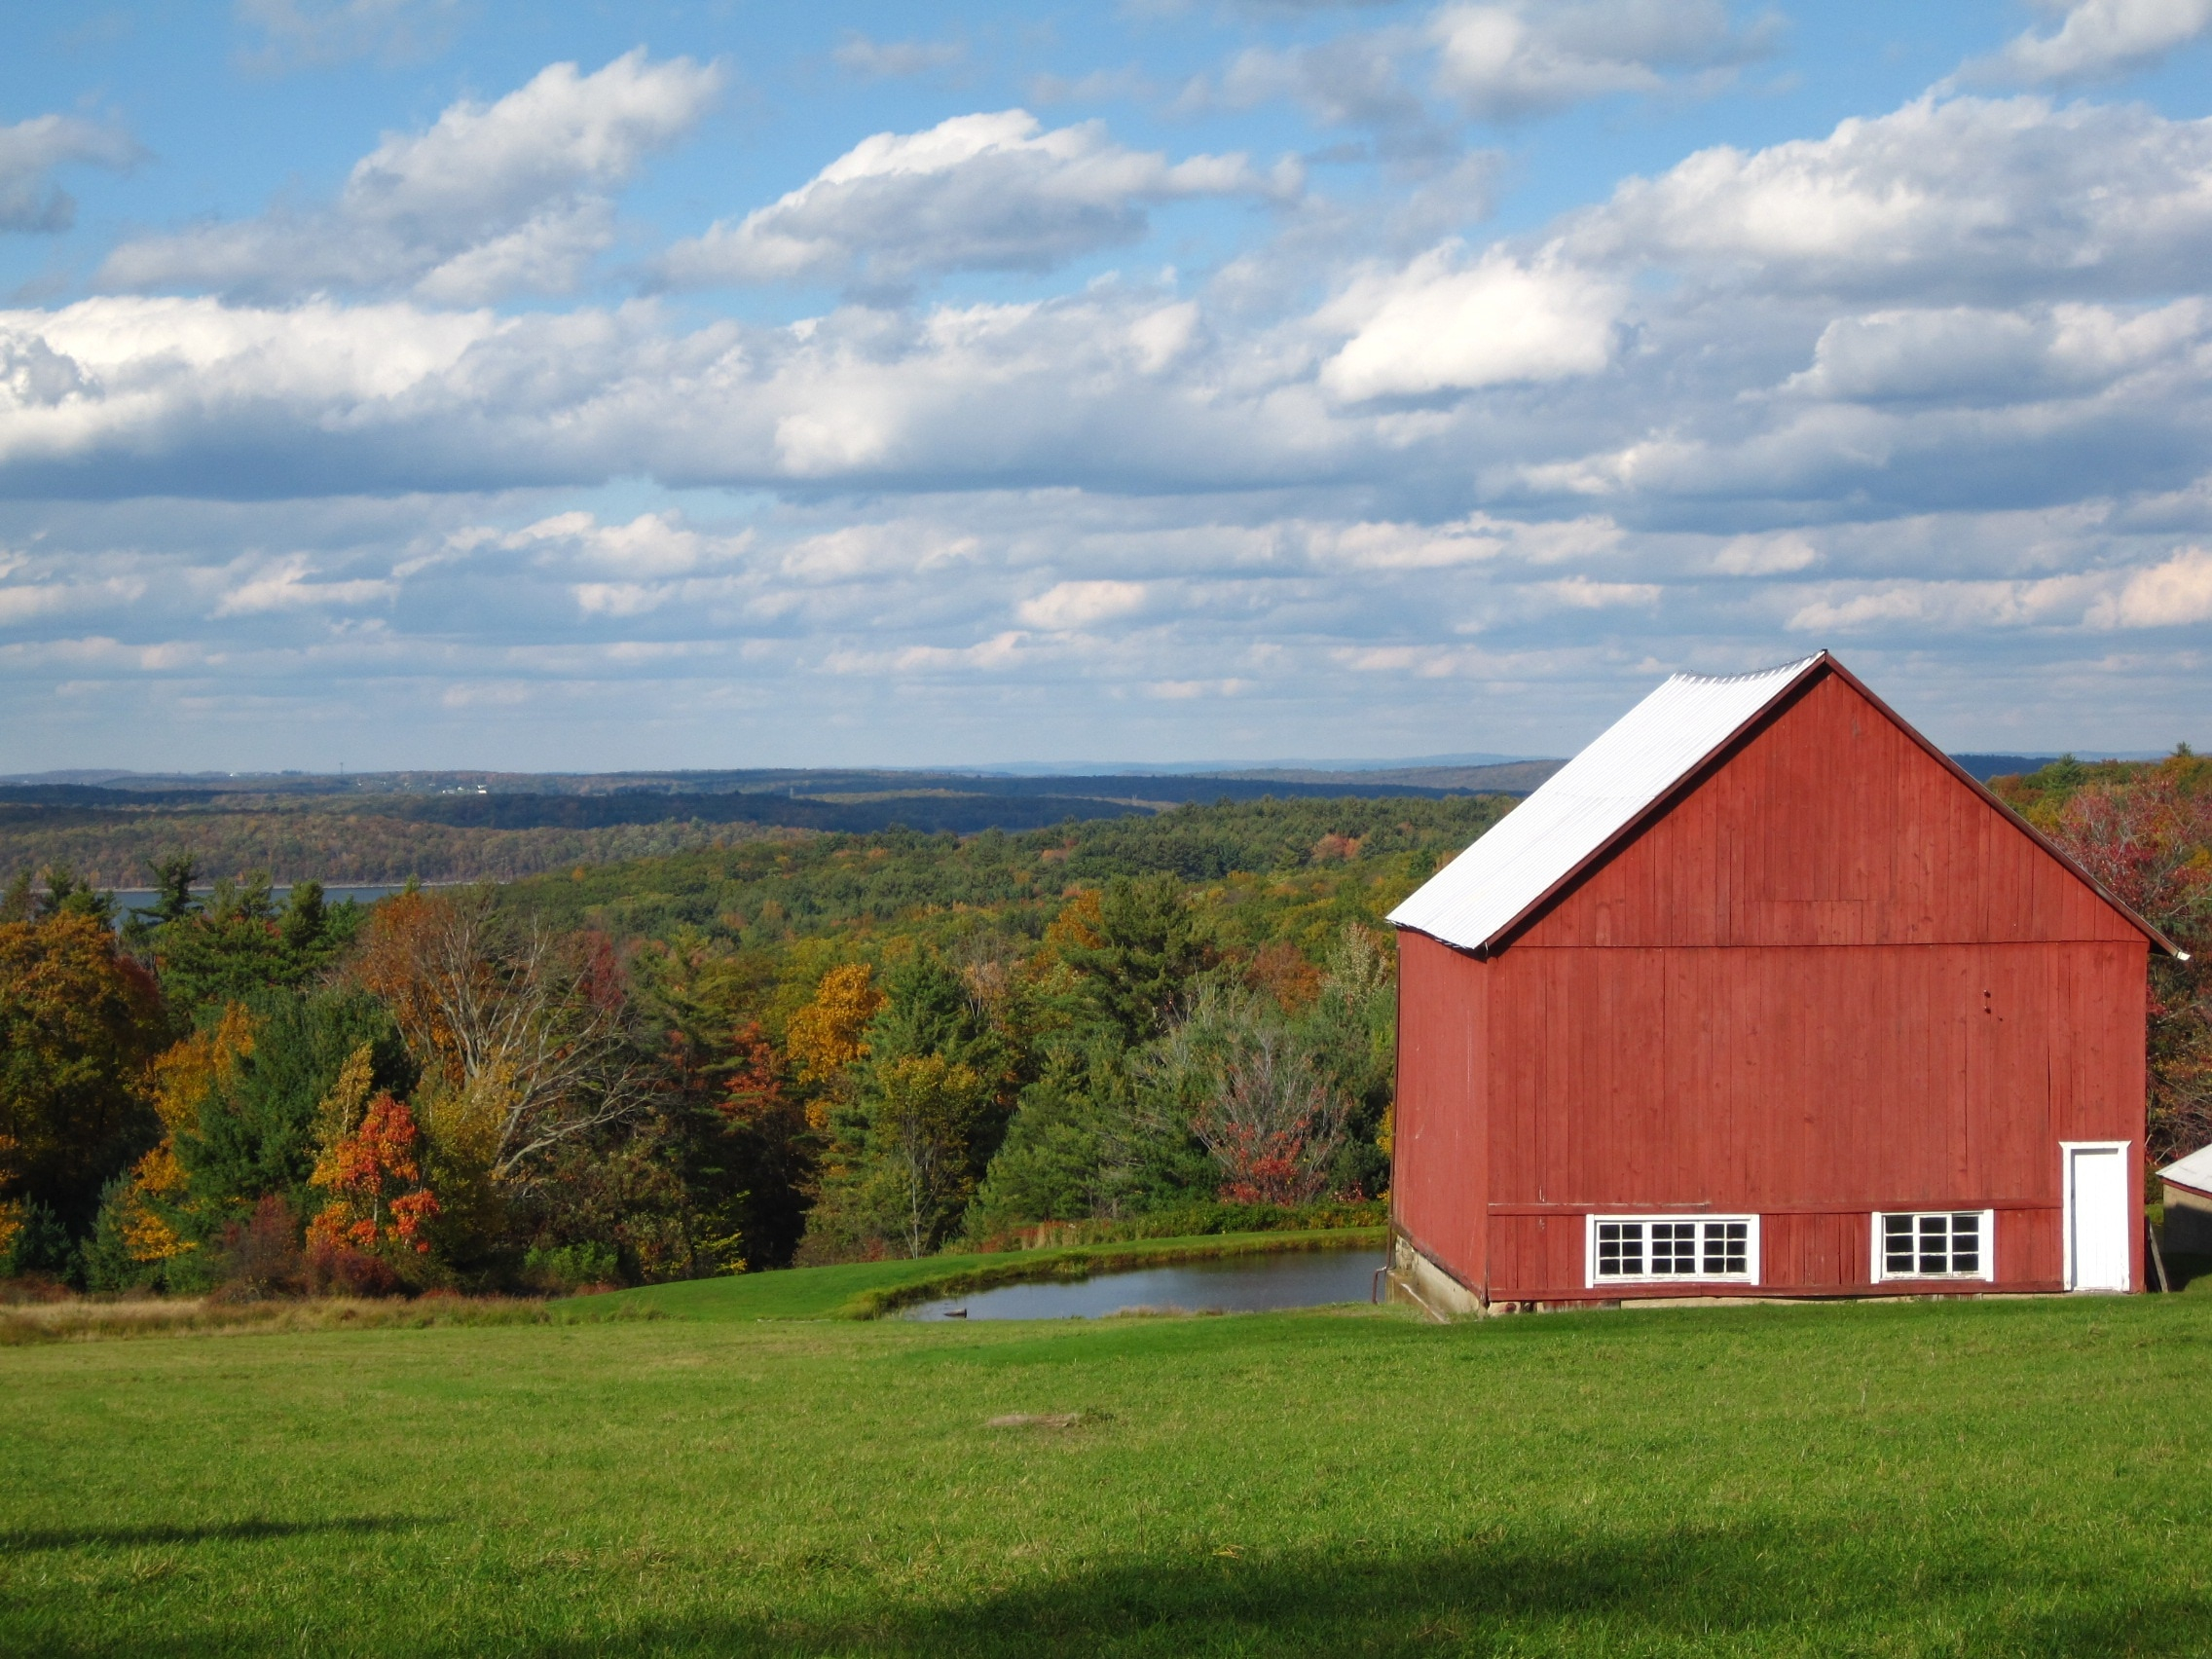 2272x1704 red barn on grass field free image | Peakpx